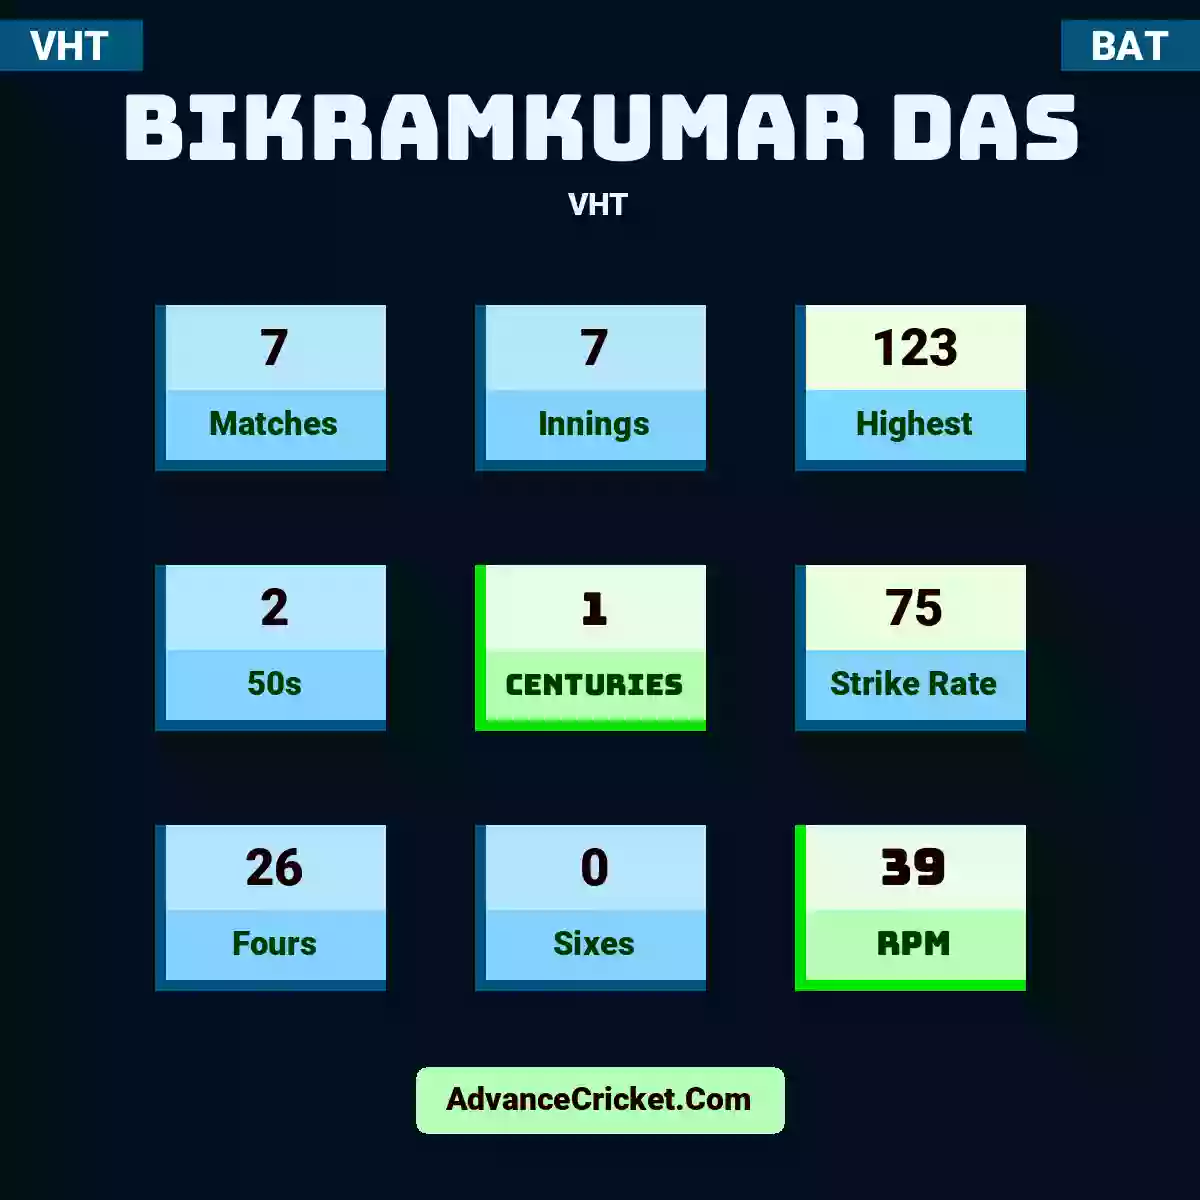 Bikramkumar Das VHT , Bikramkumar Das played 7 matches, scored 123 runs as highest, 2 half-centuries, and 1 centuries, with a strike rate of 75. B.Das hit 26 fours and 0 sixes, with an RPM of 39.